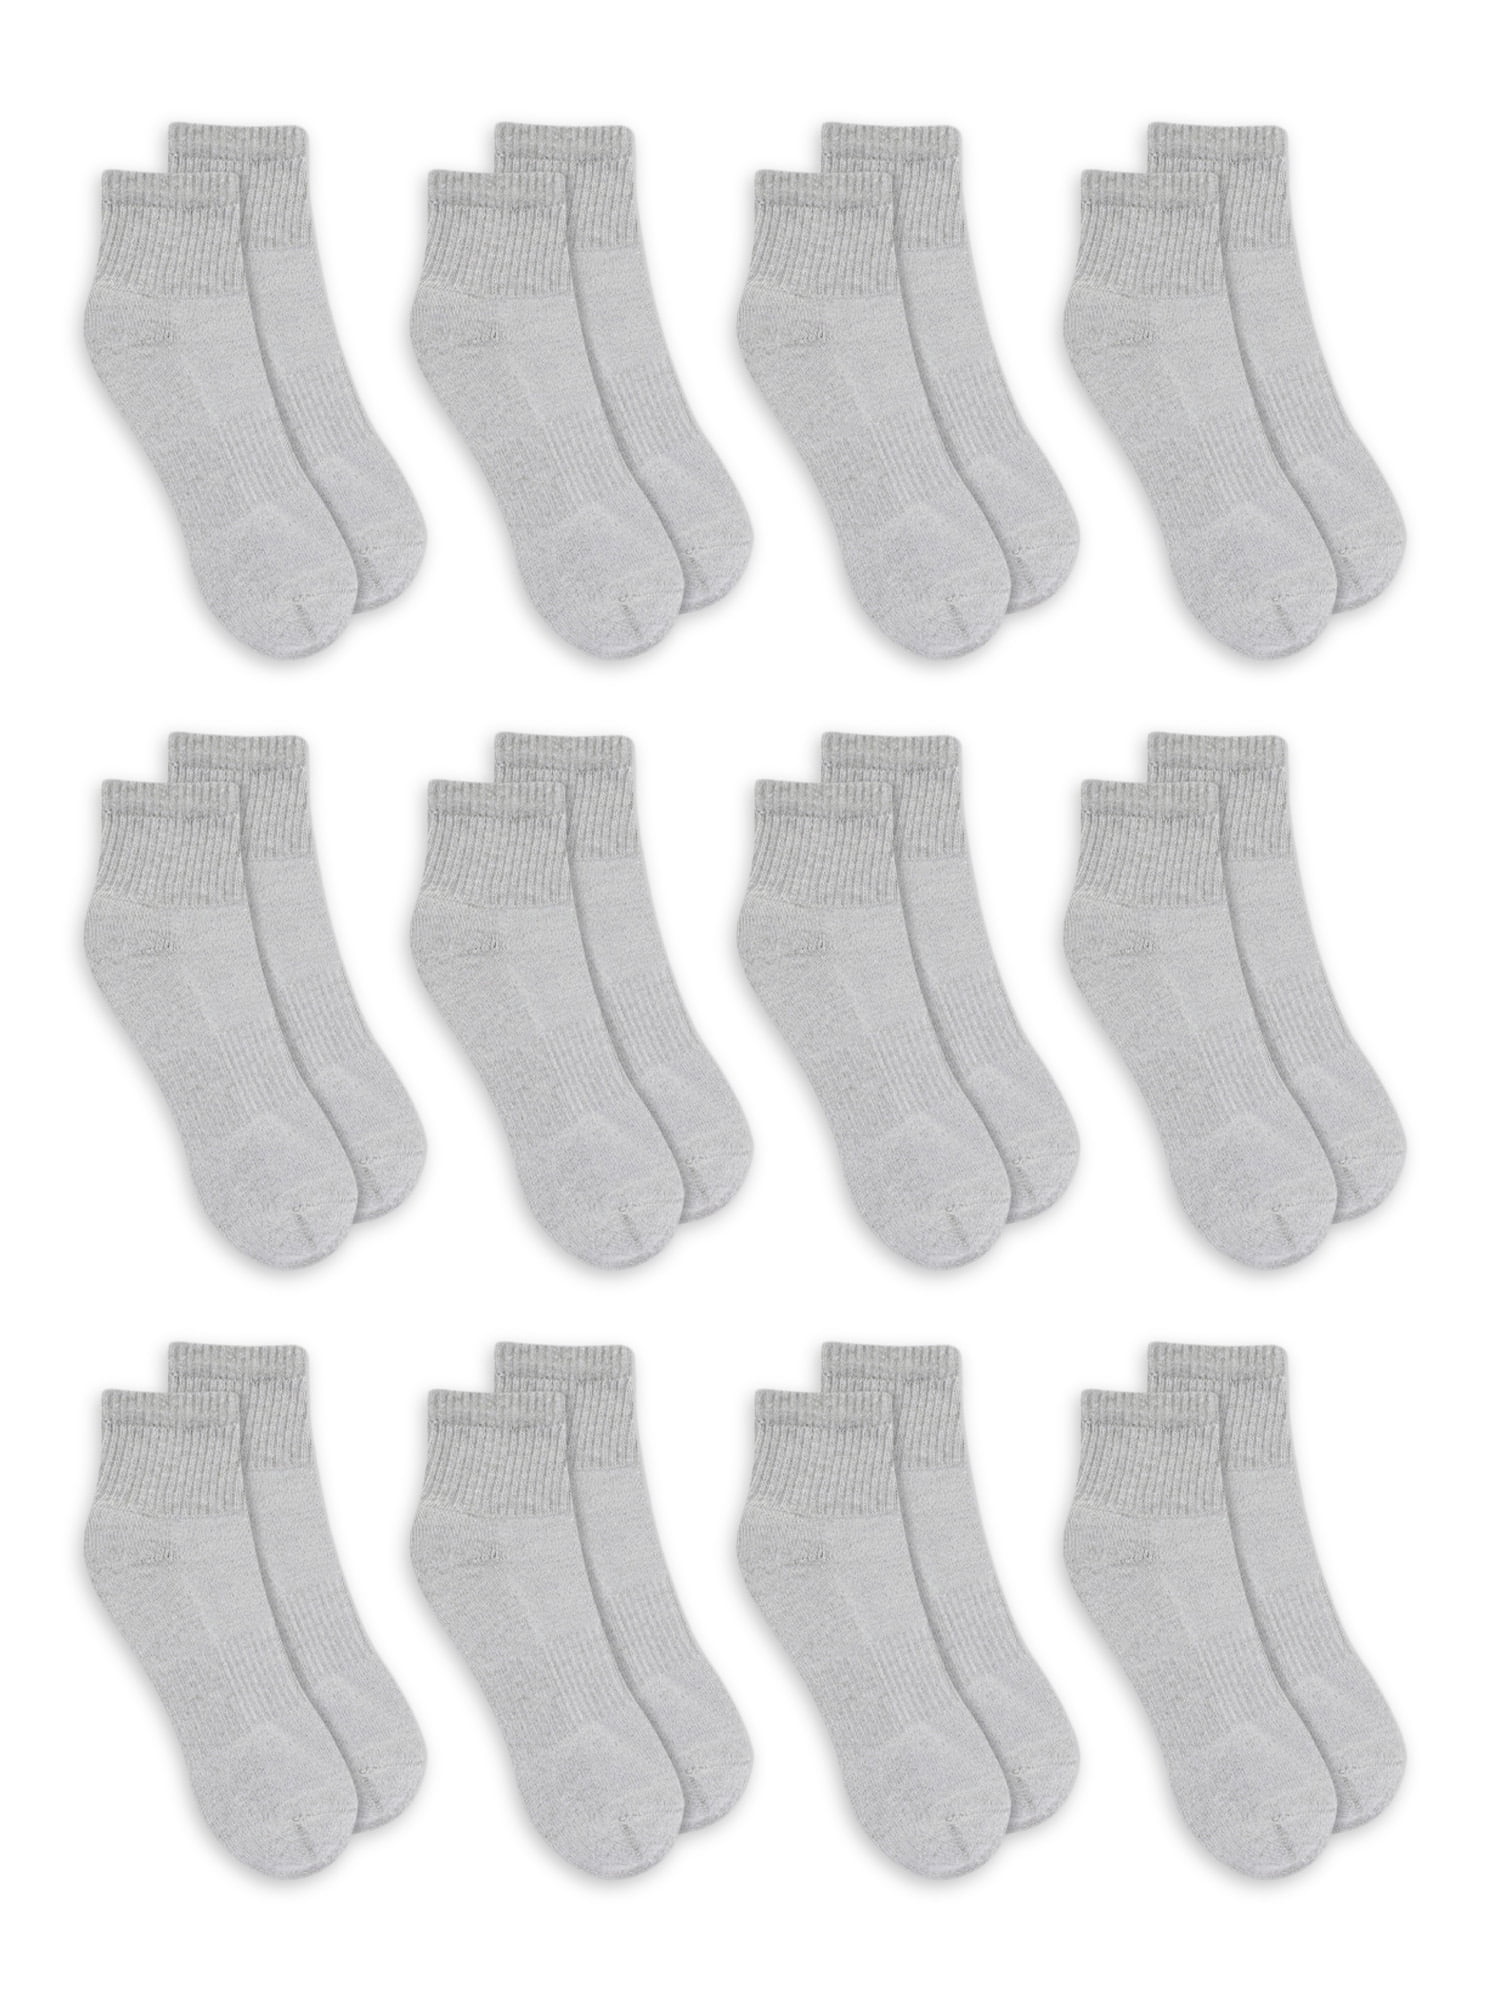 Athletic Works Men's Recycled Ankle Socks 12 Pair Pack